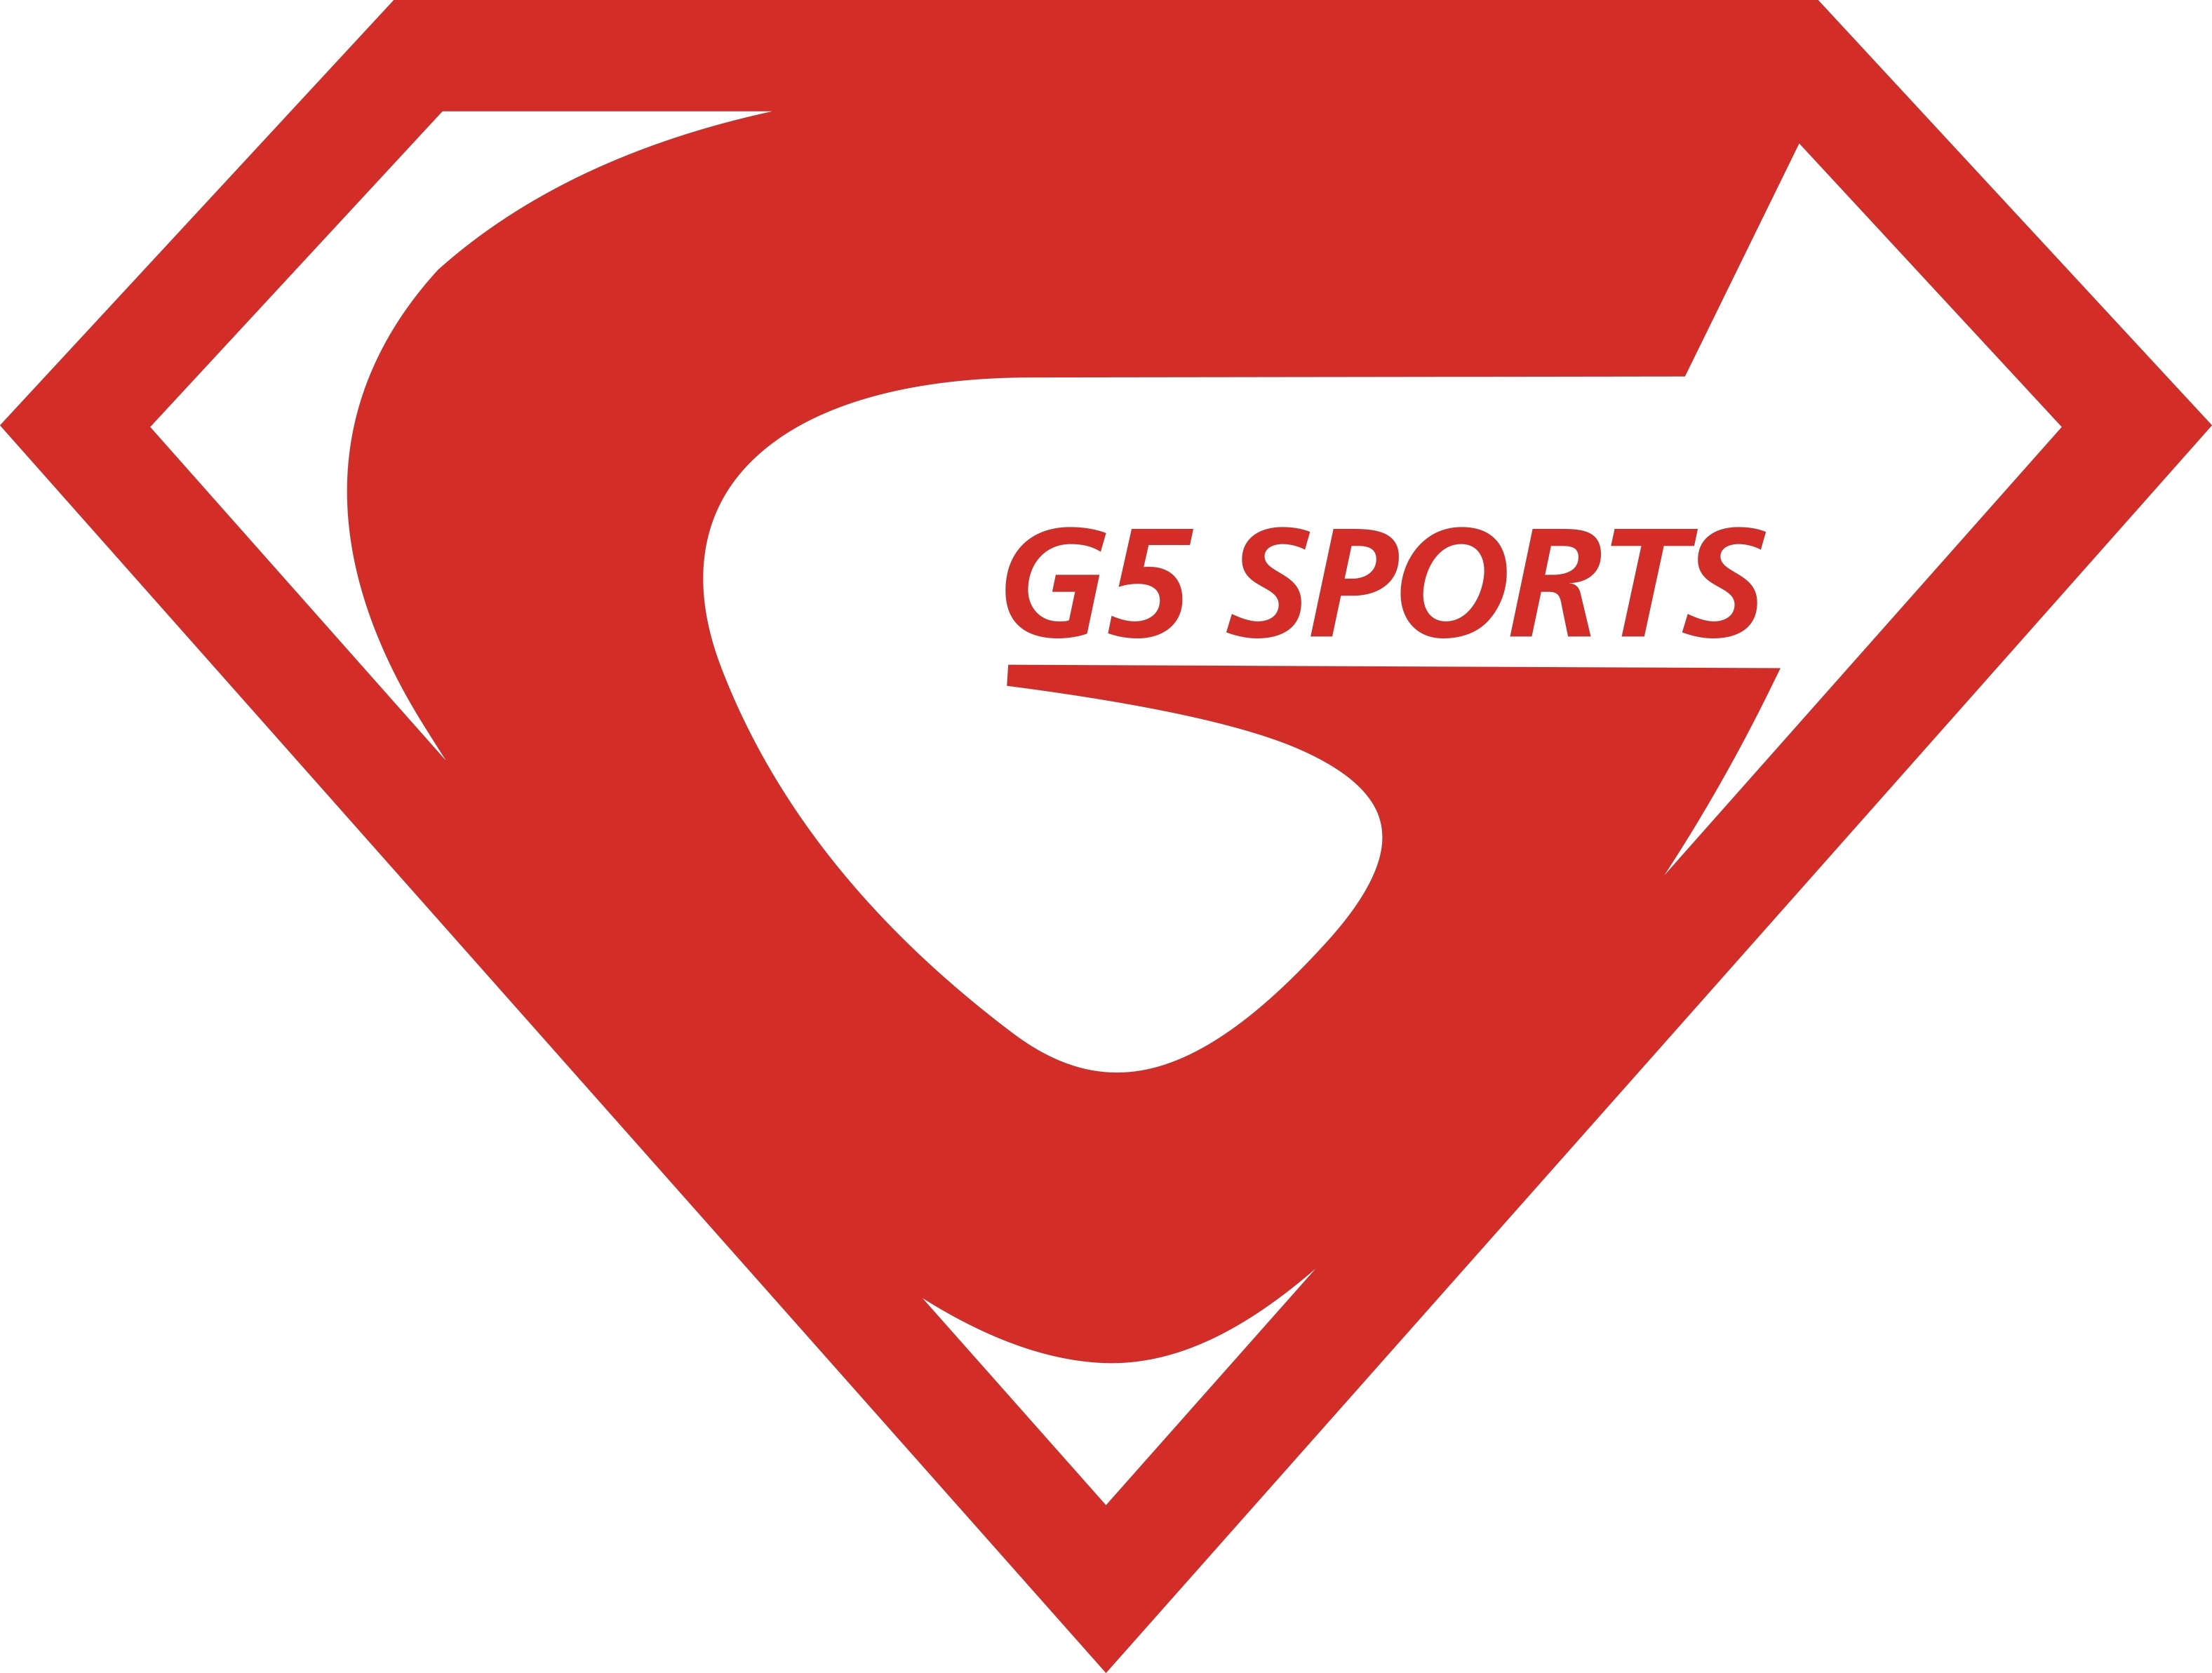 G5 SPORTS